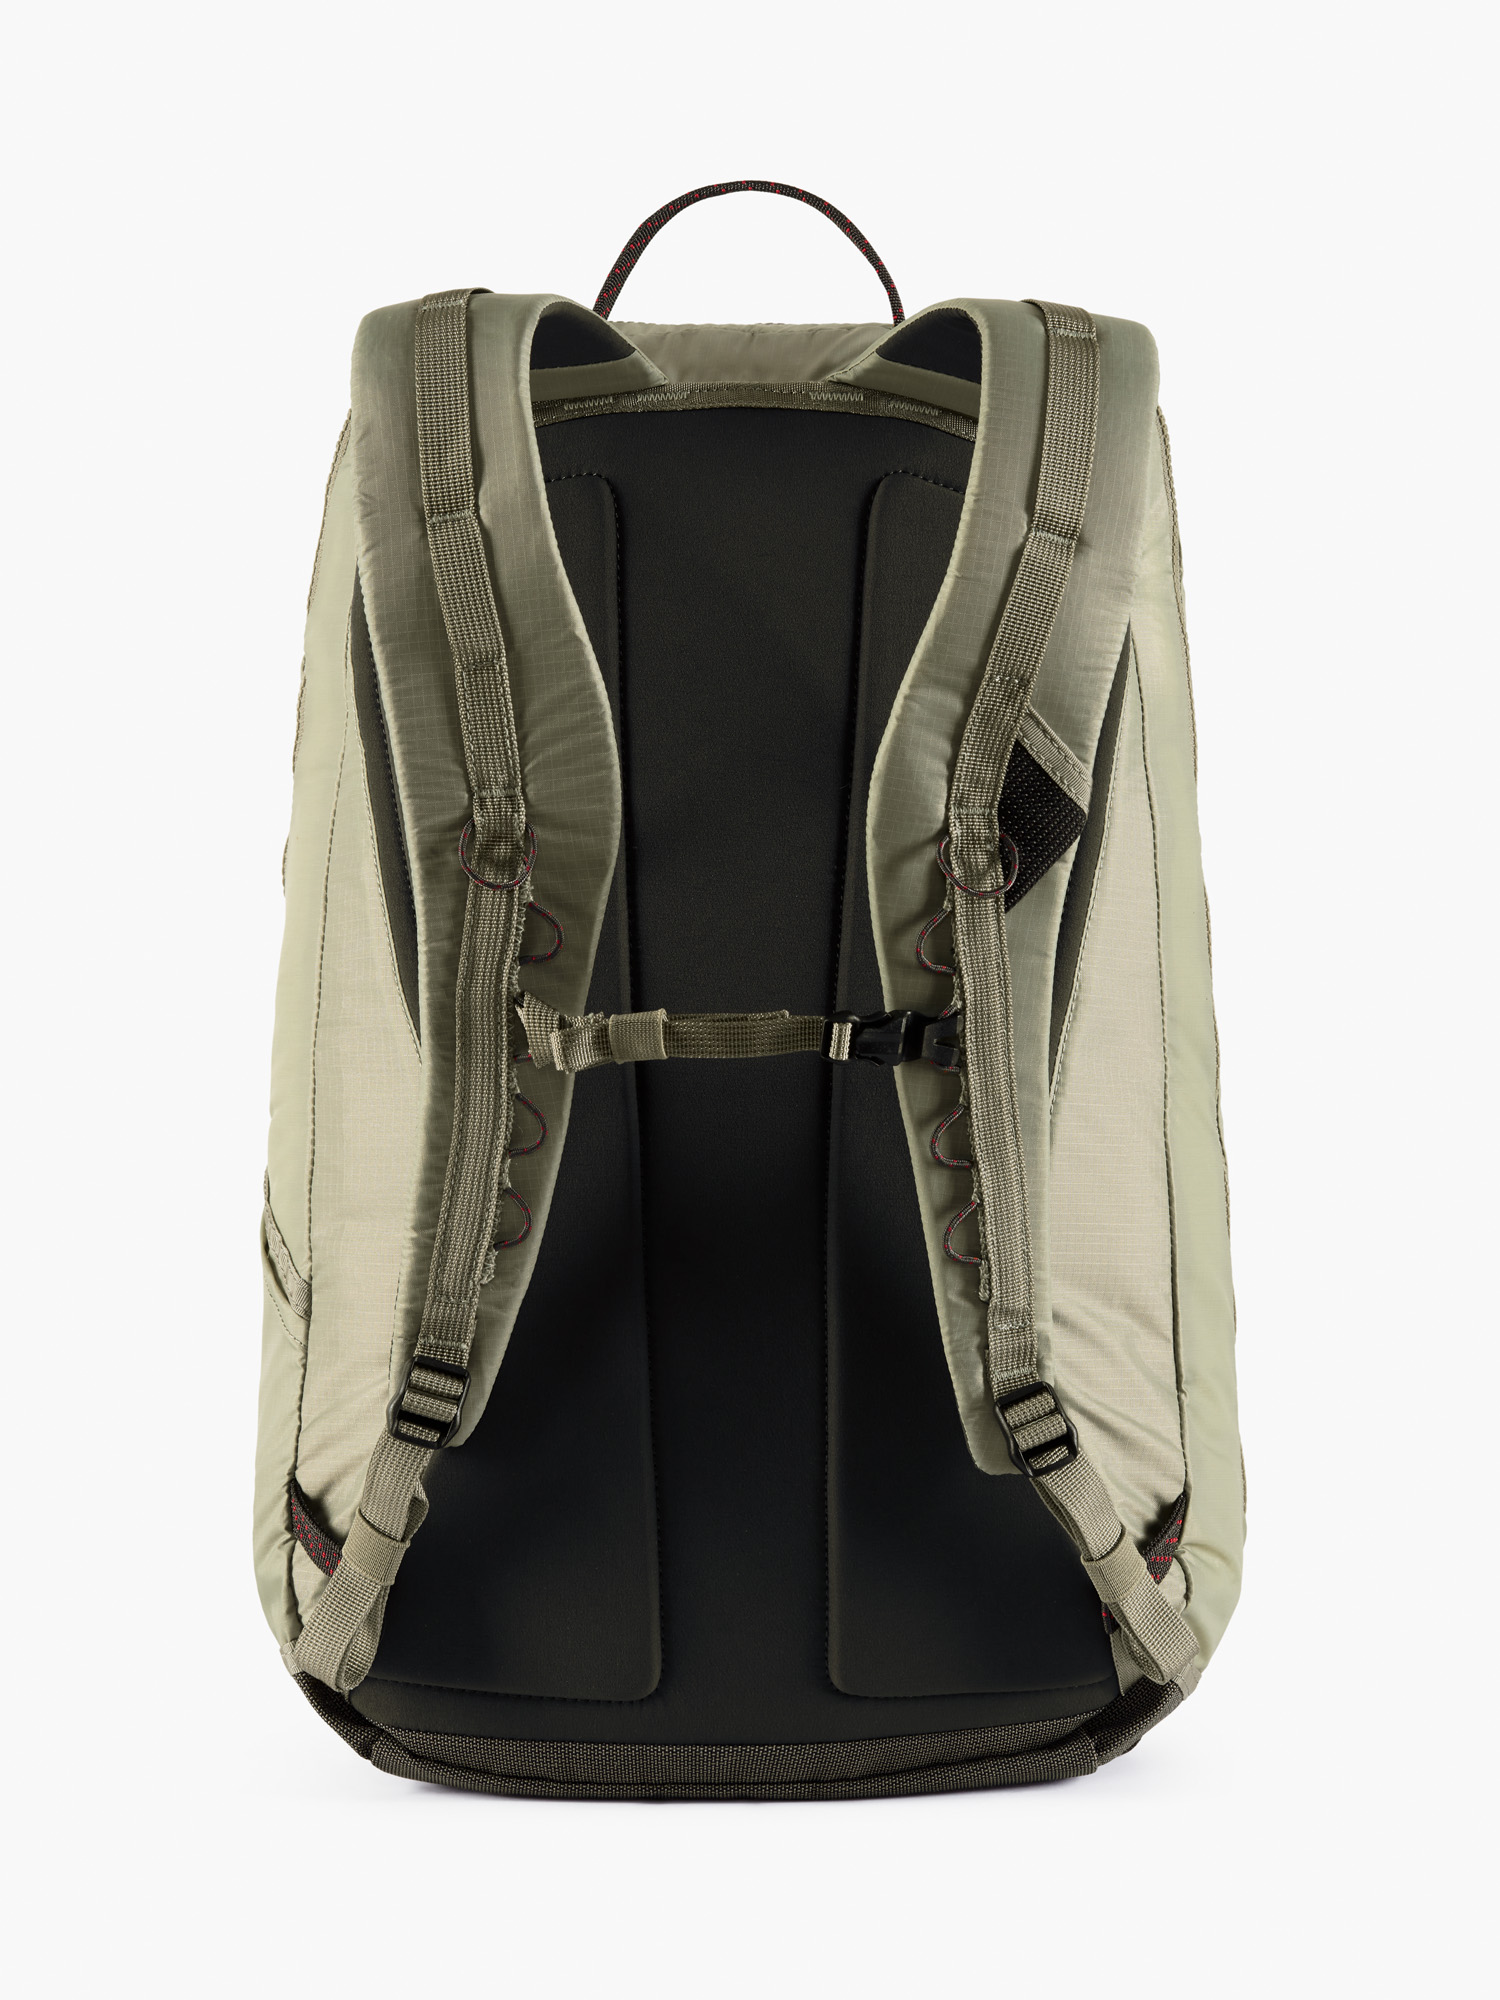 40456U21 - Gjalp Backpack 18L - Tea Green